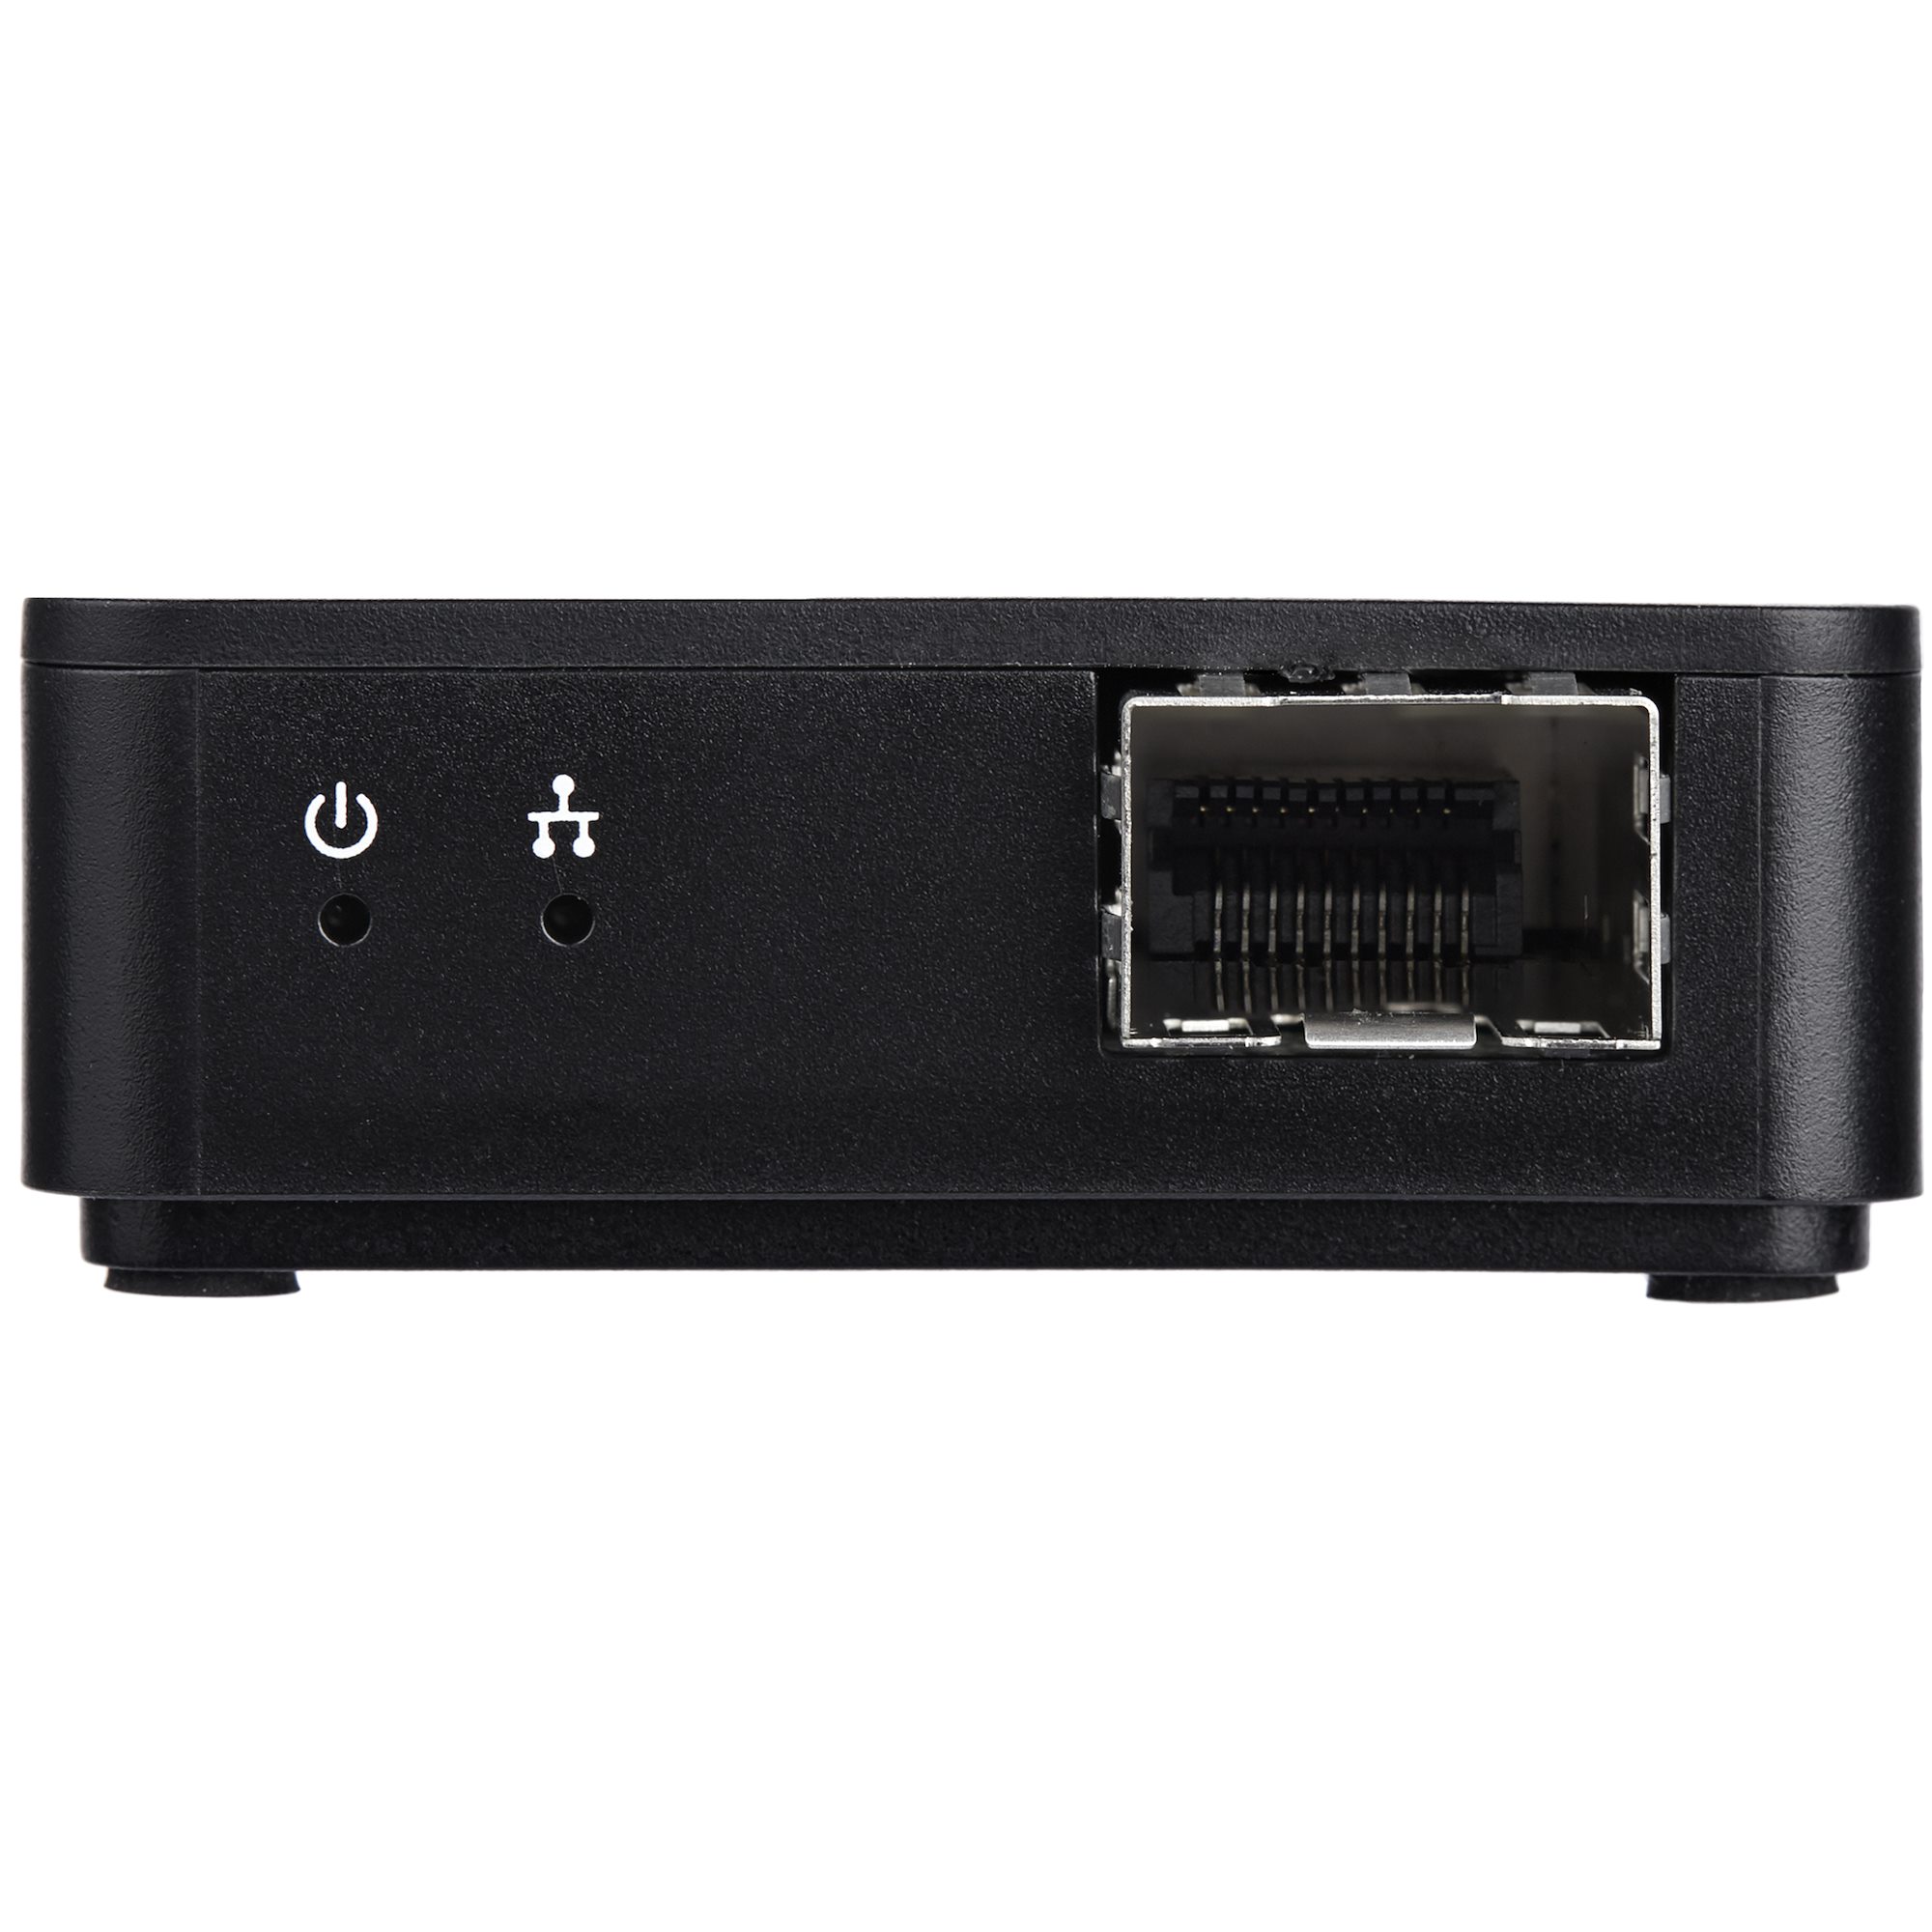 USB 3.0 - オープンSFP 変換アダプタ 1000Base-SX/LX - USB & USB-C 